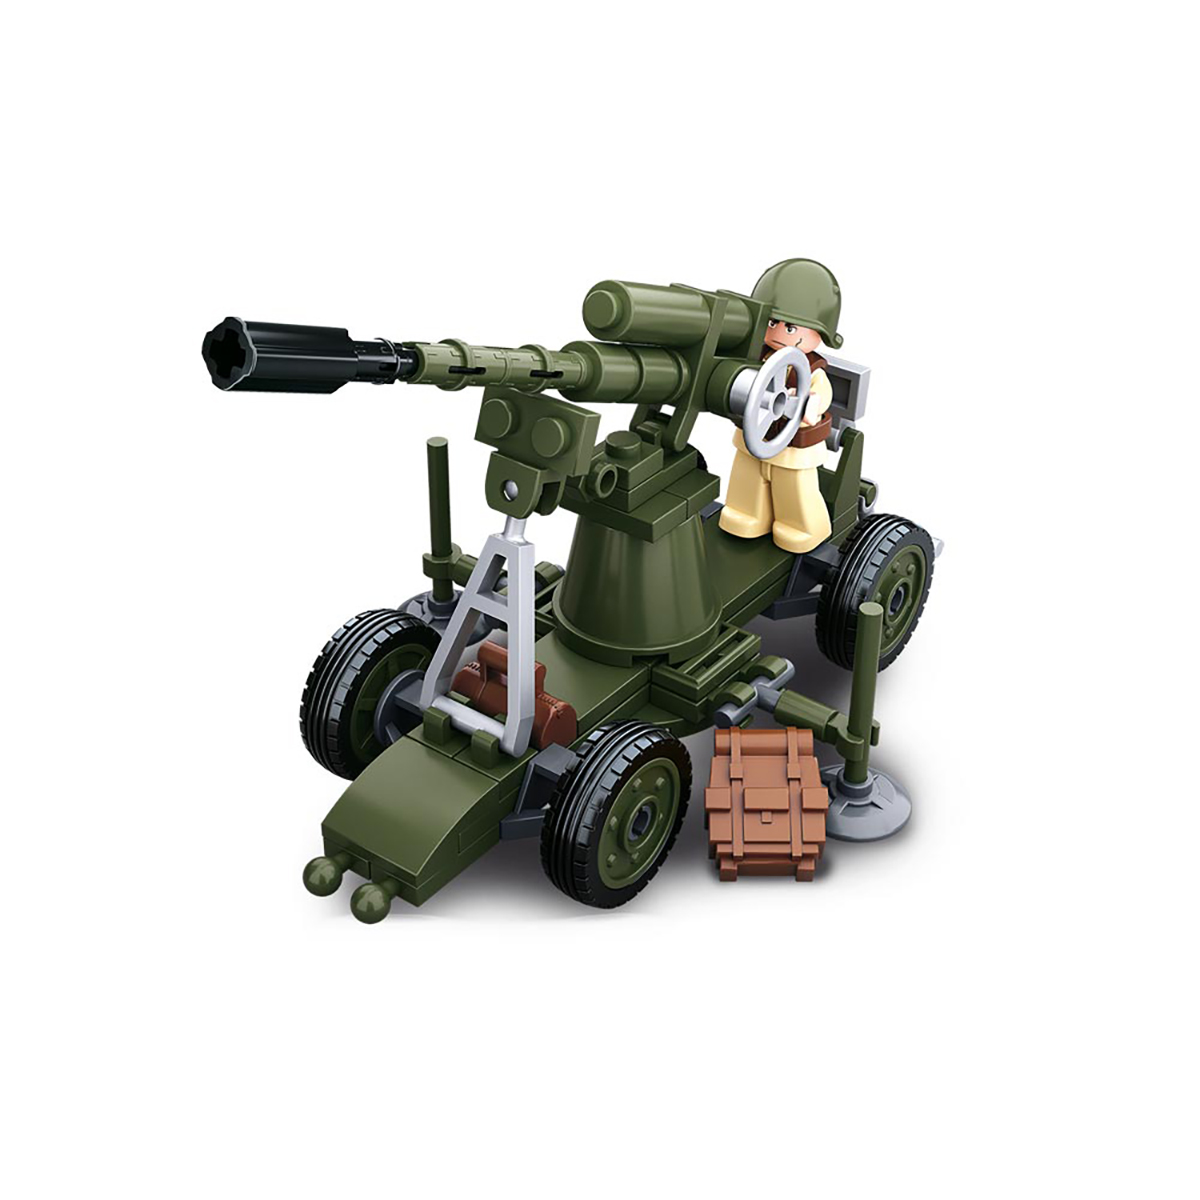 Klemmbausteine (77 WWII - SLUBAN Geschütz Teile) [M38-B0678C] Mini-Bauset